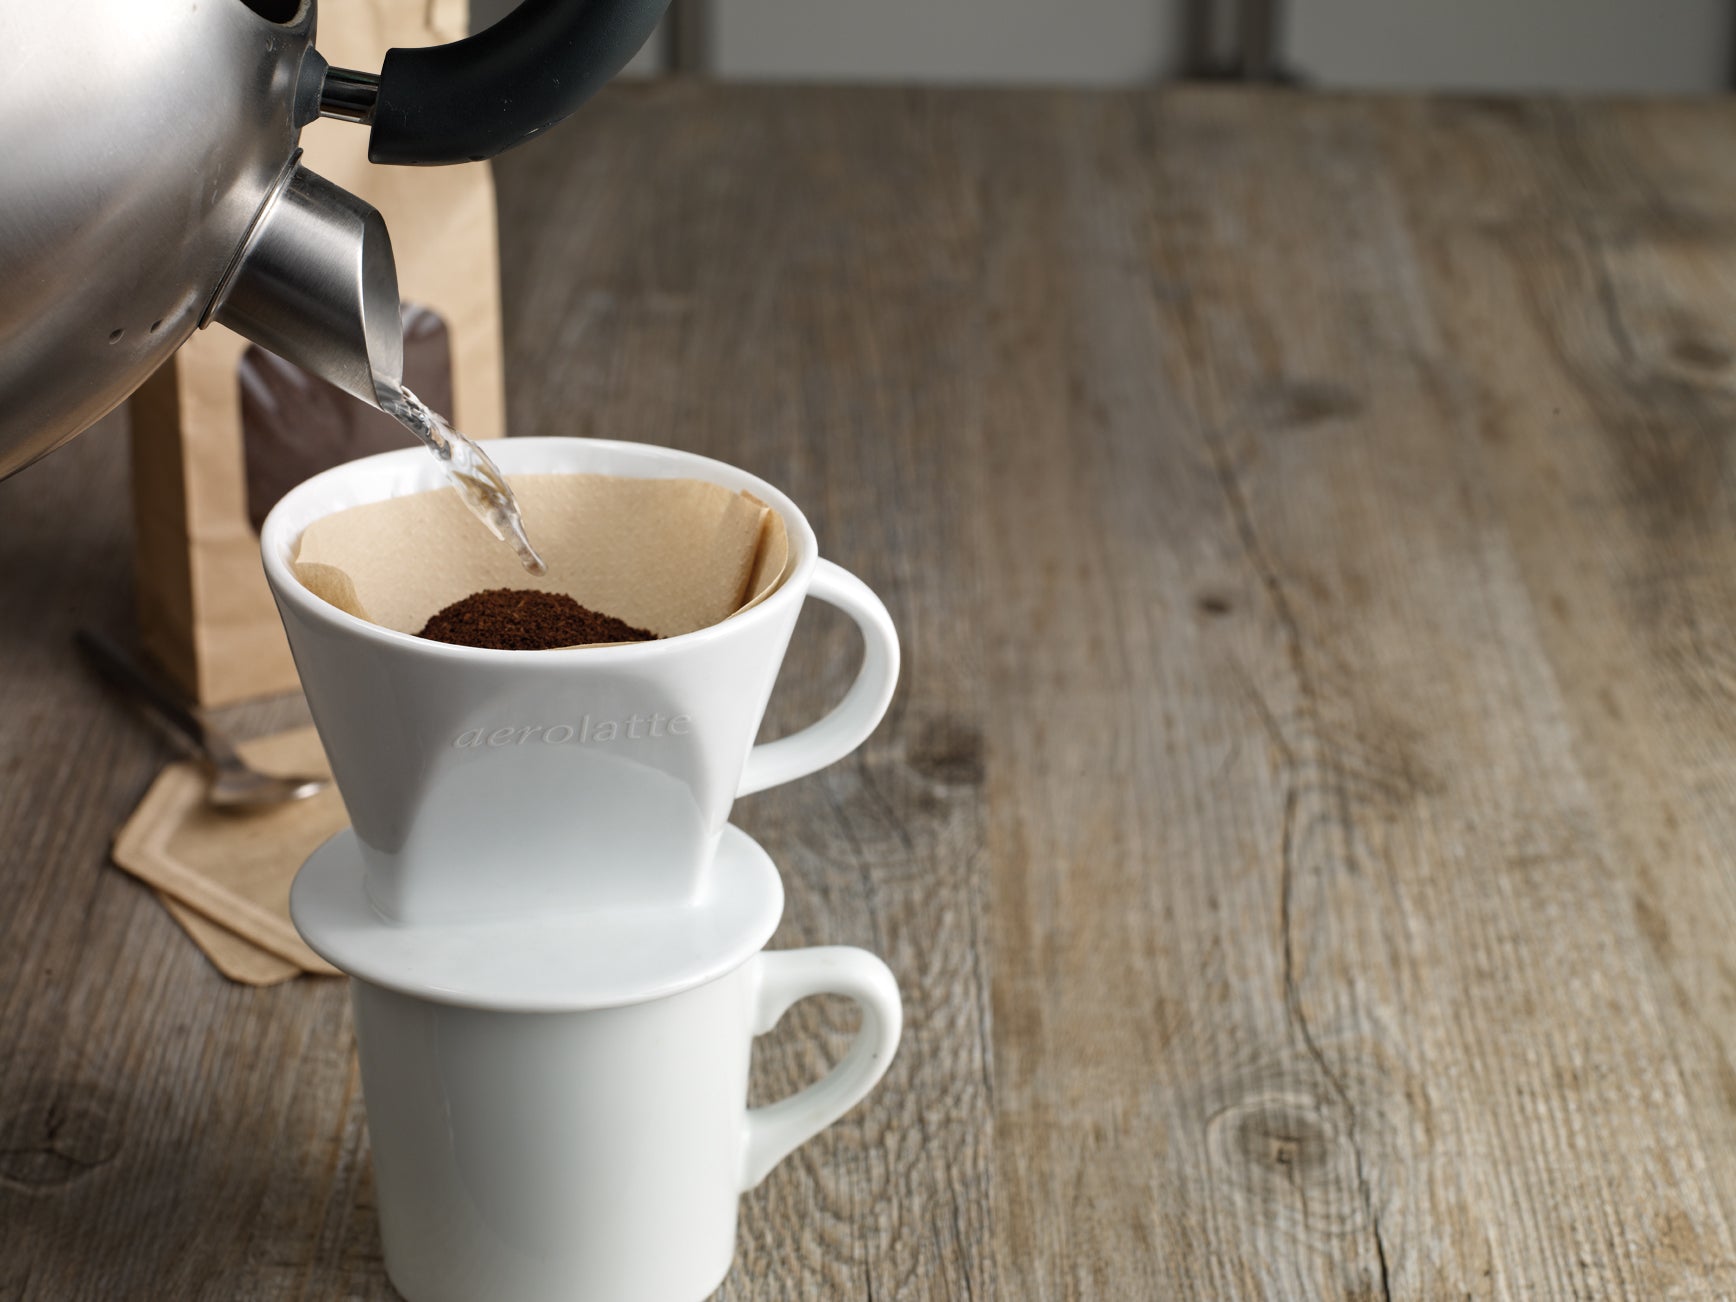 Aerolatte Ceramic Coffee Filter Cone – 2 Cup